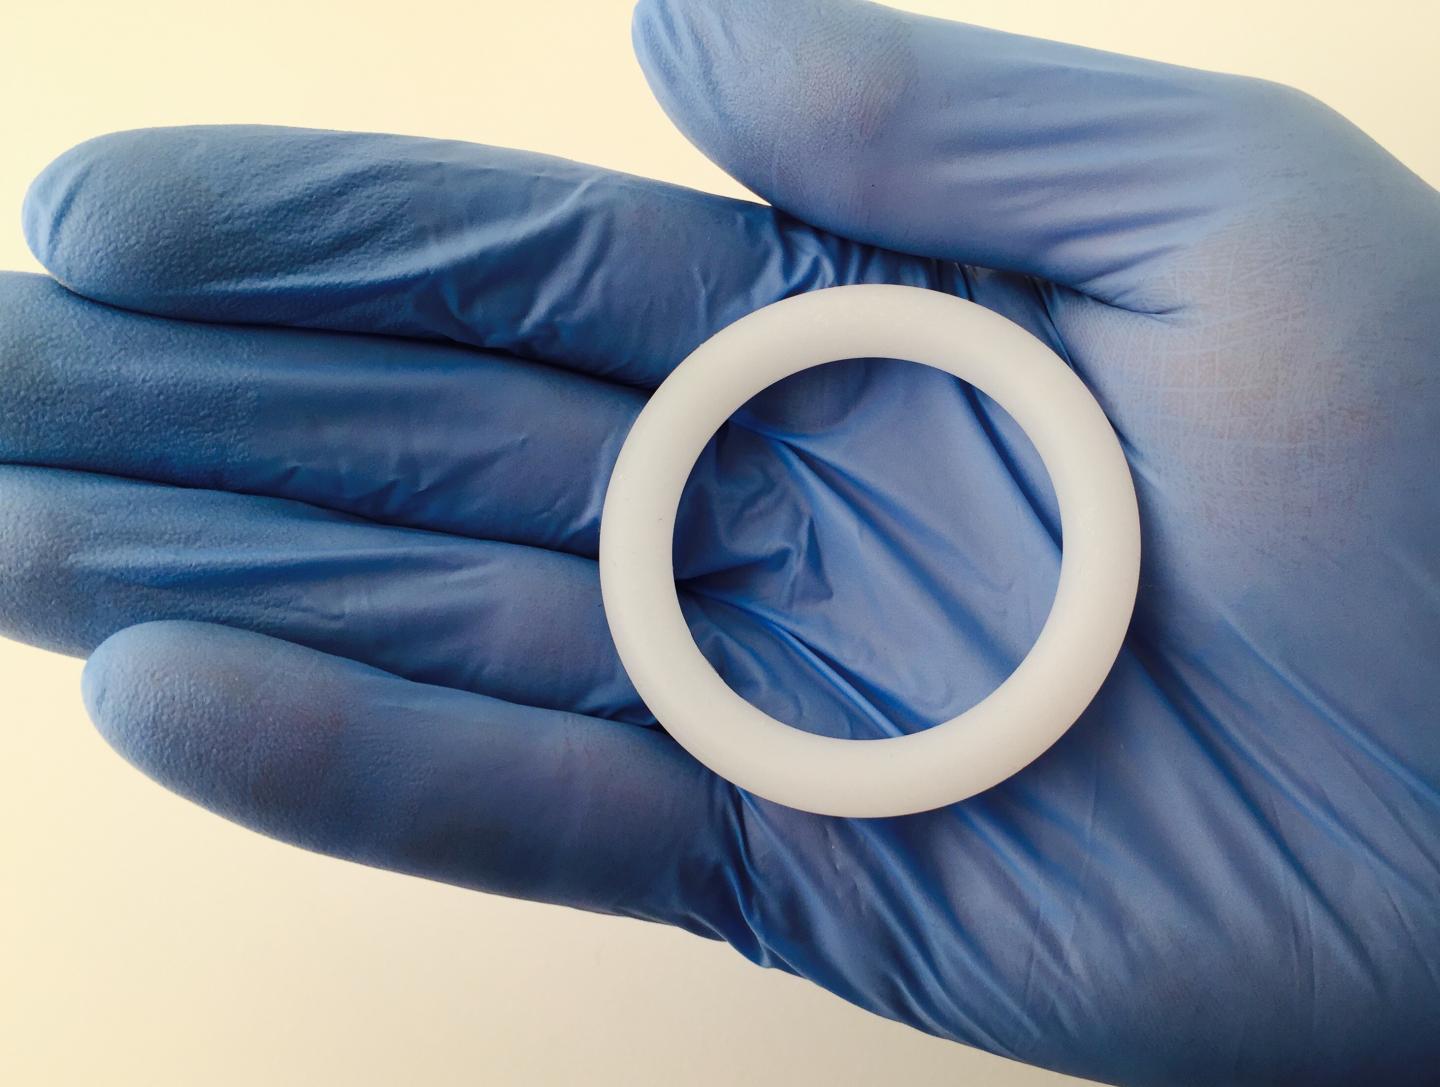 The Dapivirine Vaginal Ring